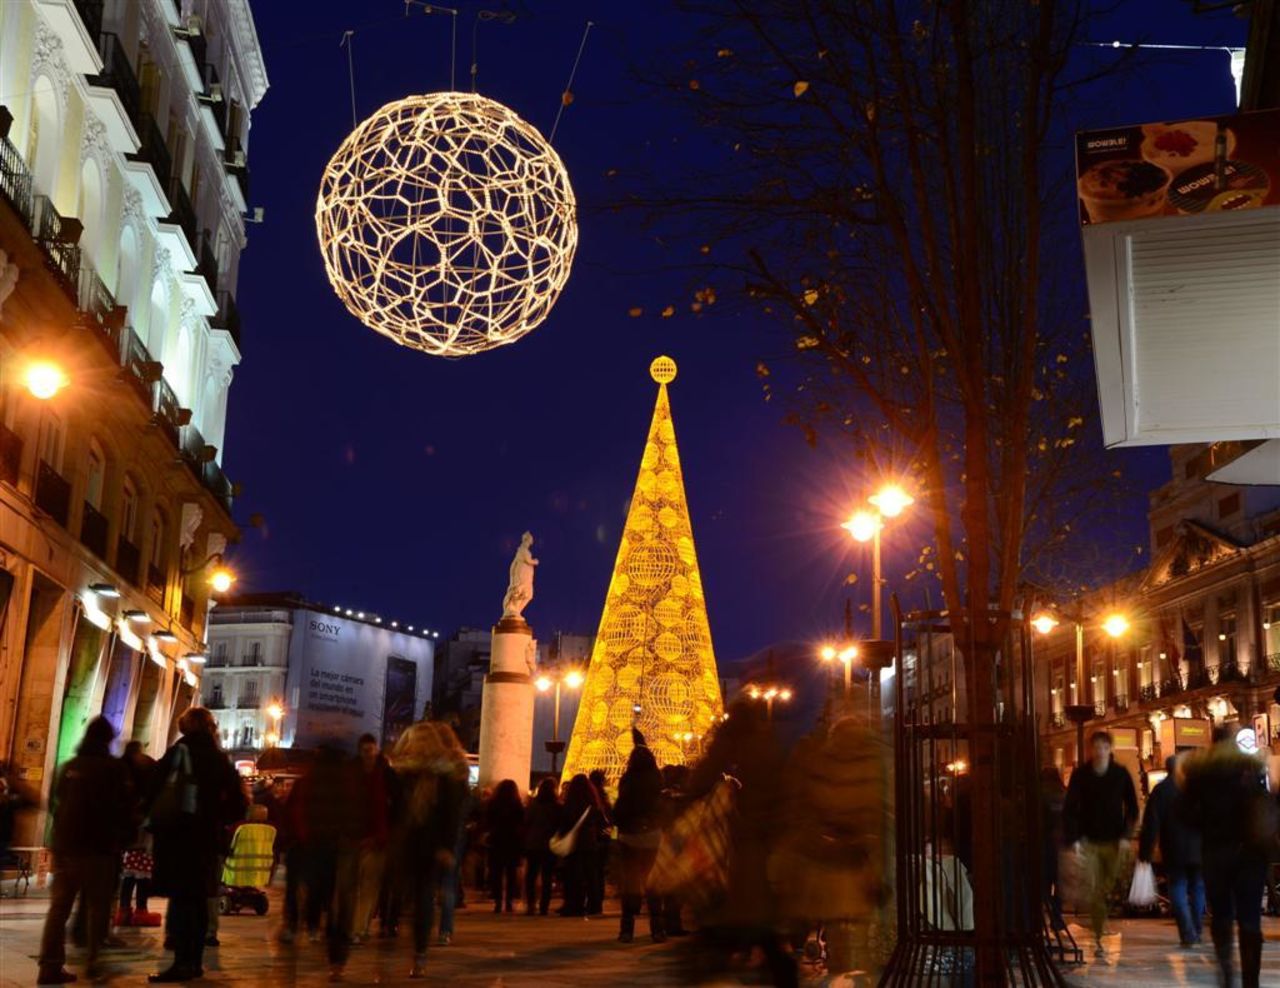 Bright Christmas decor adorns Puerto del Sol, a bustling square in <a href="http://ireport.cnn.com/docs/DOC-1069767">Madrid, Spain</a>. 